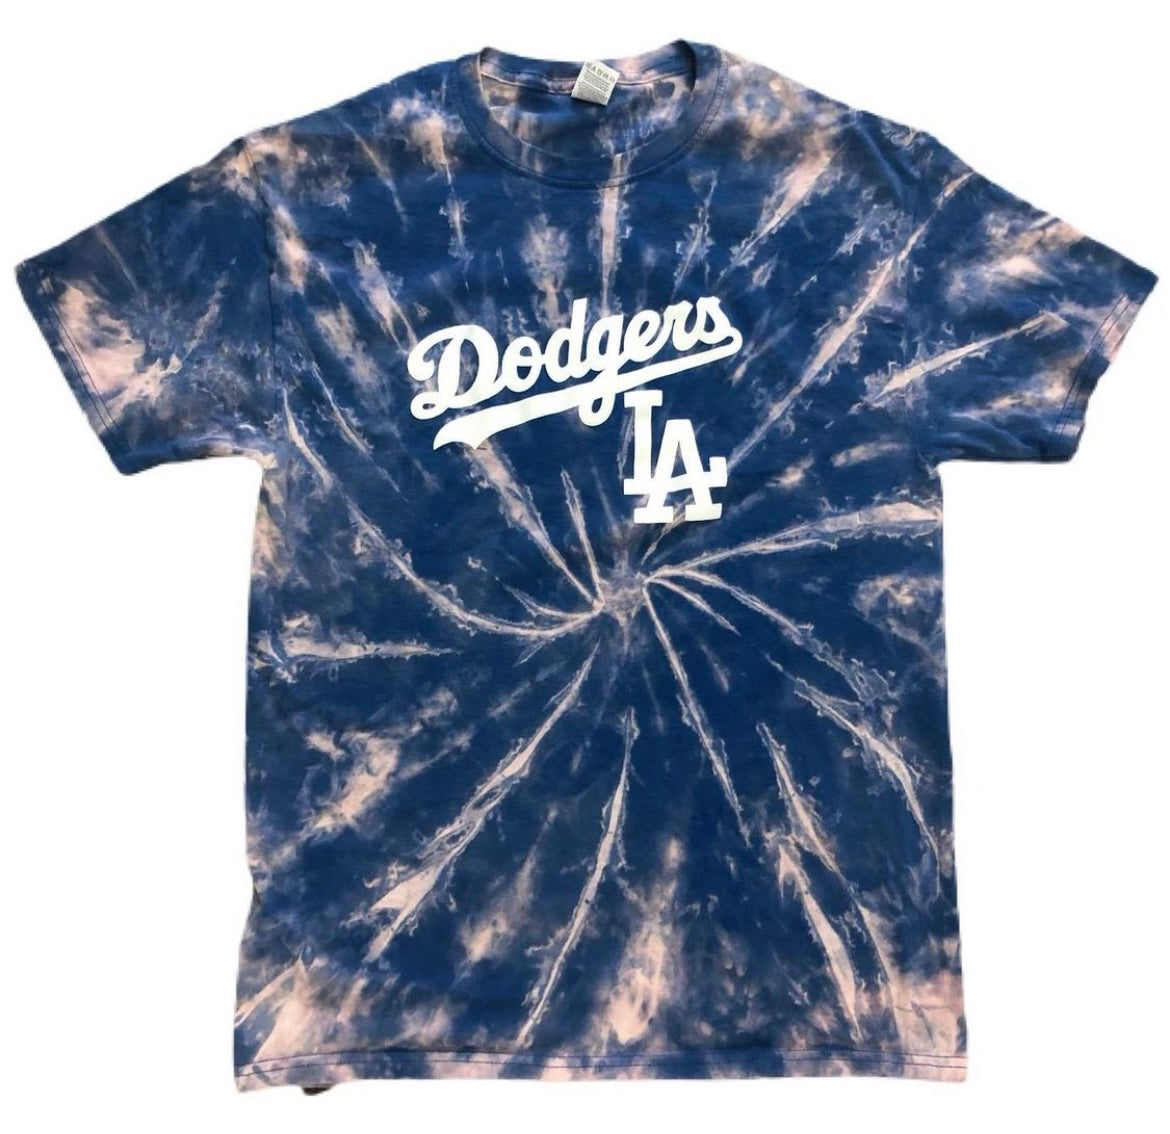 Dodgers tie dye T-shirt